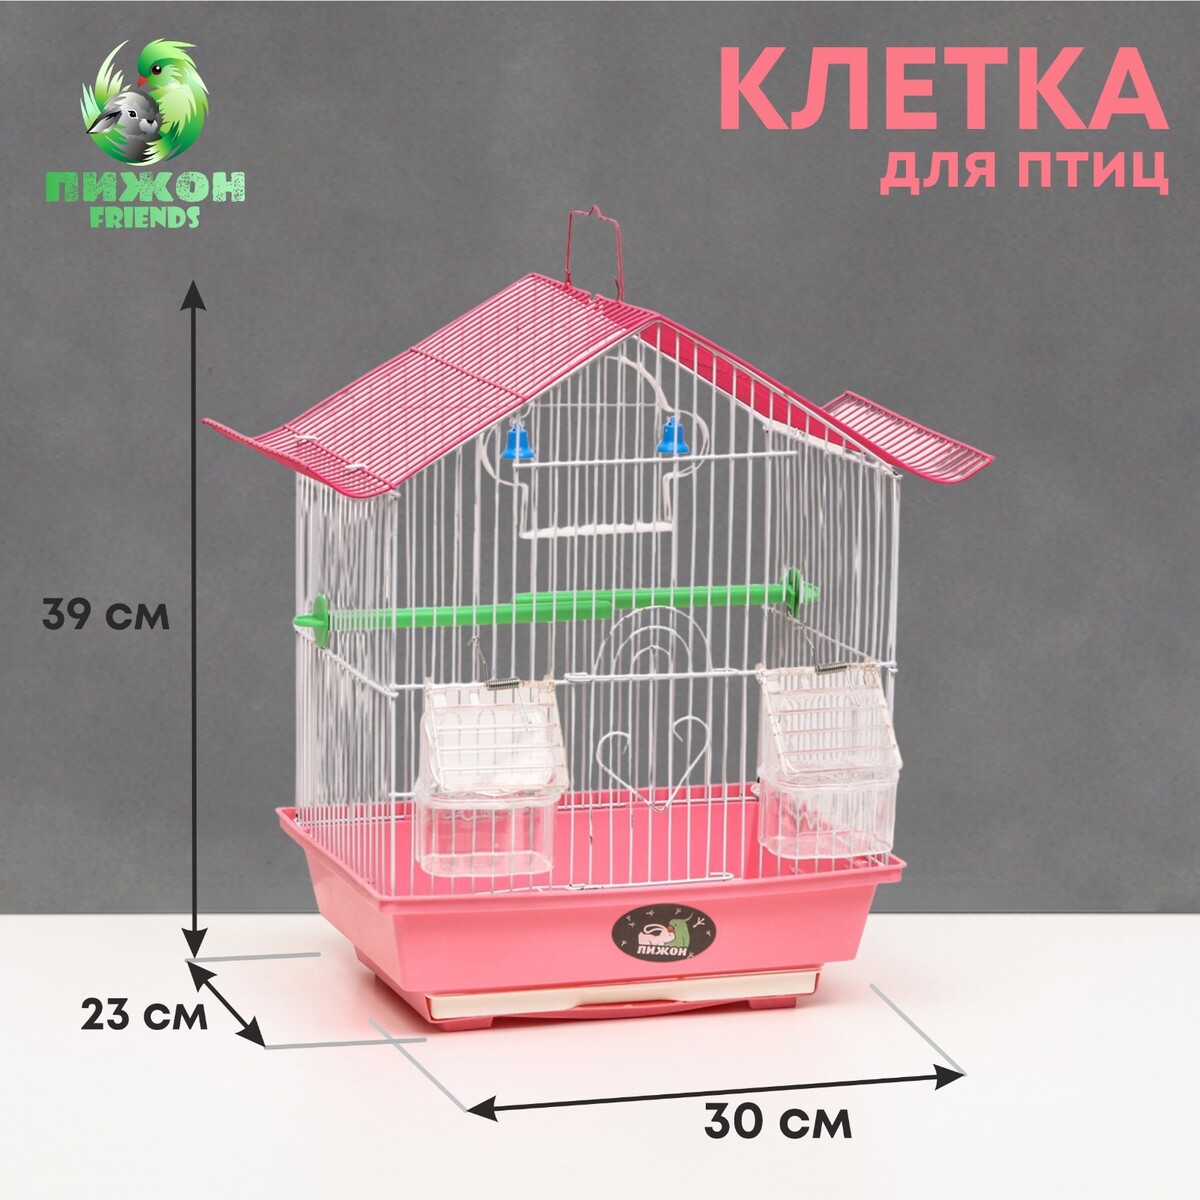 Клетка для птиц укомплектованная bd-1/1d, 30 х 23 х 39 см, розовая клетка для грызунов укомплектованная 27 х 19 х 28 см розовая